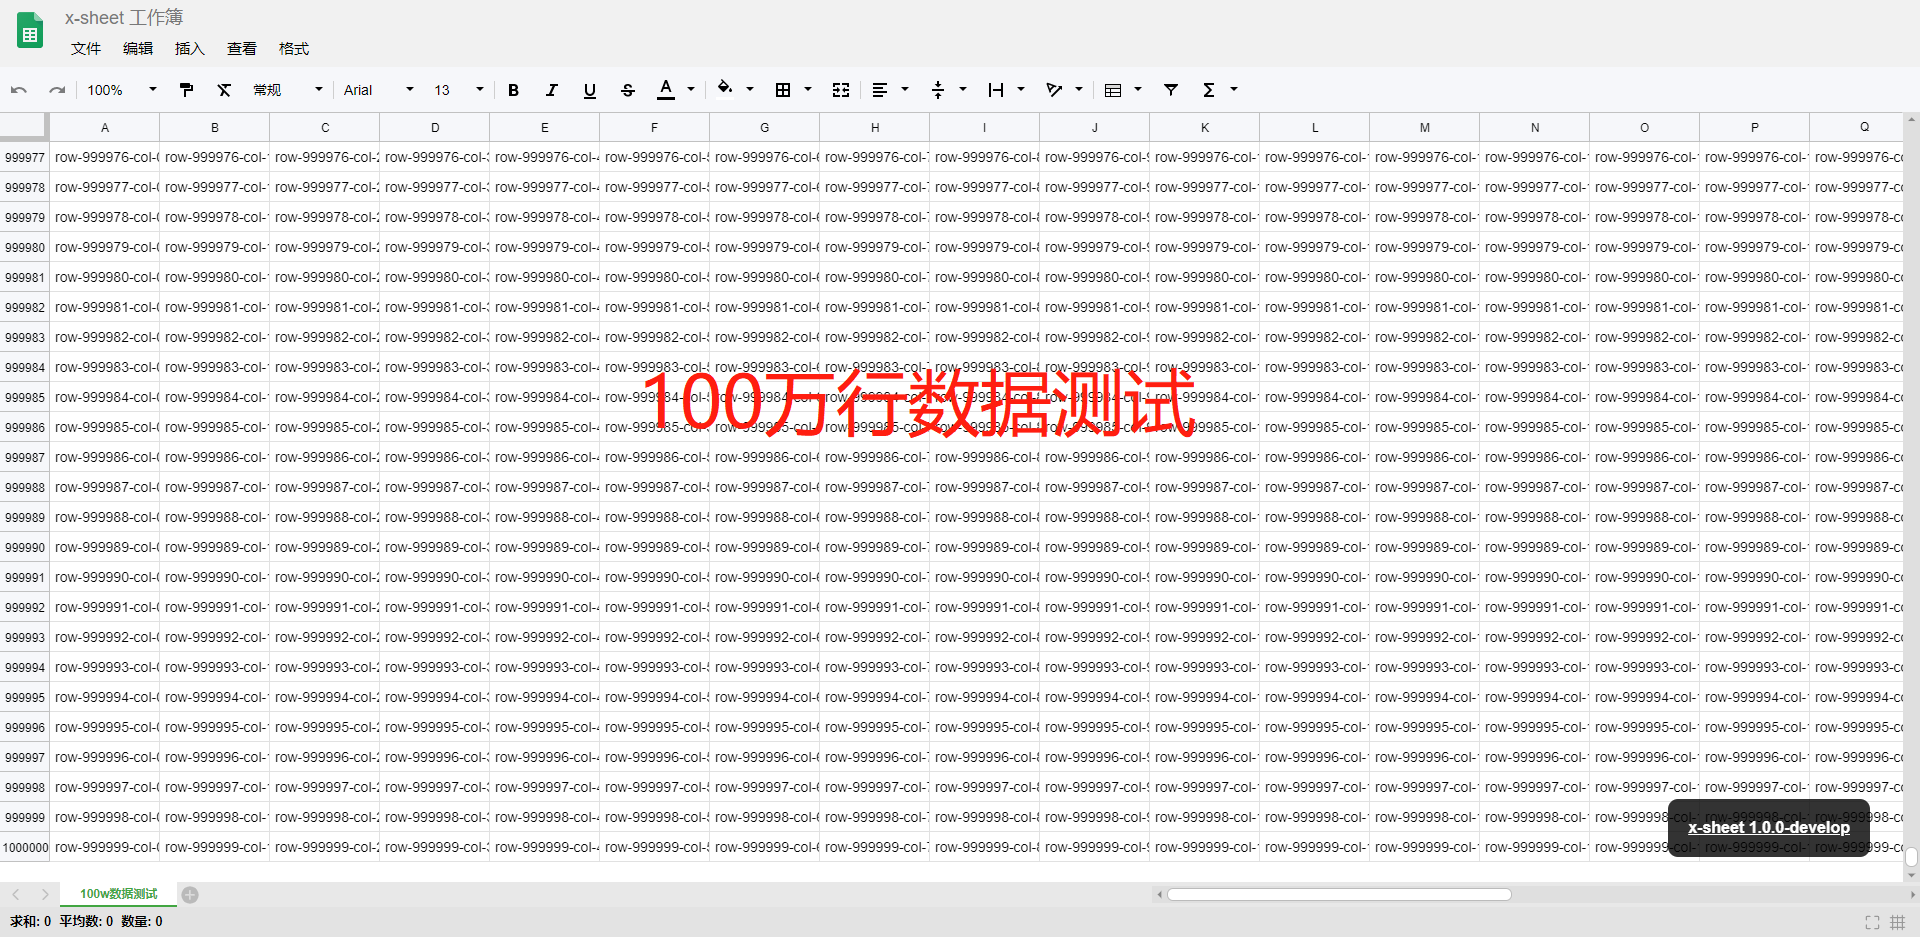 x-sheet100万行数据测试